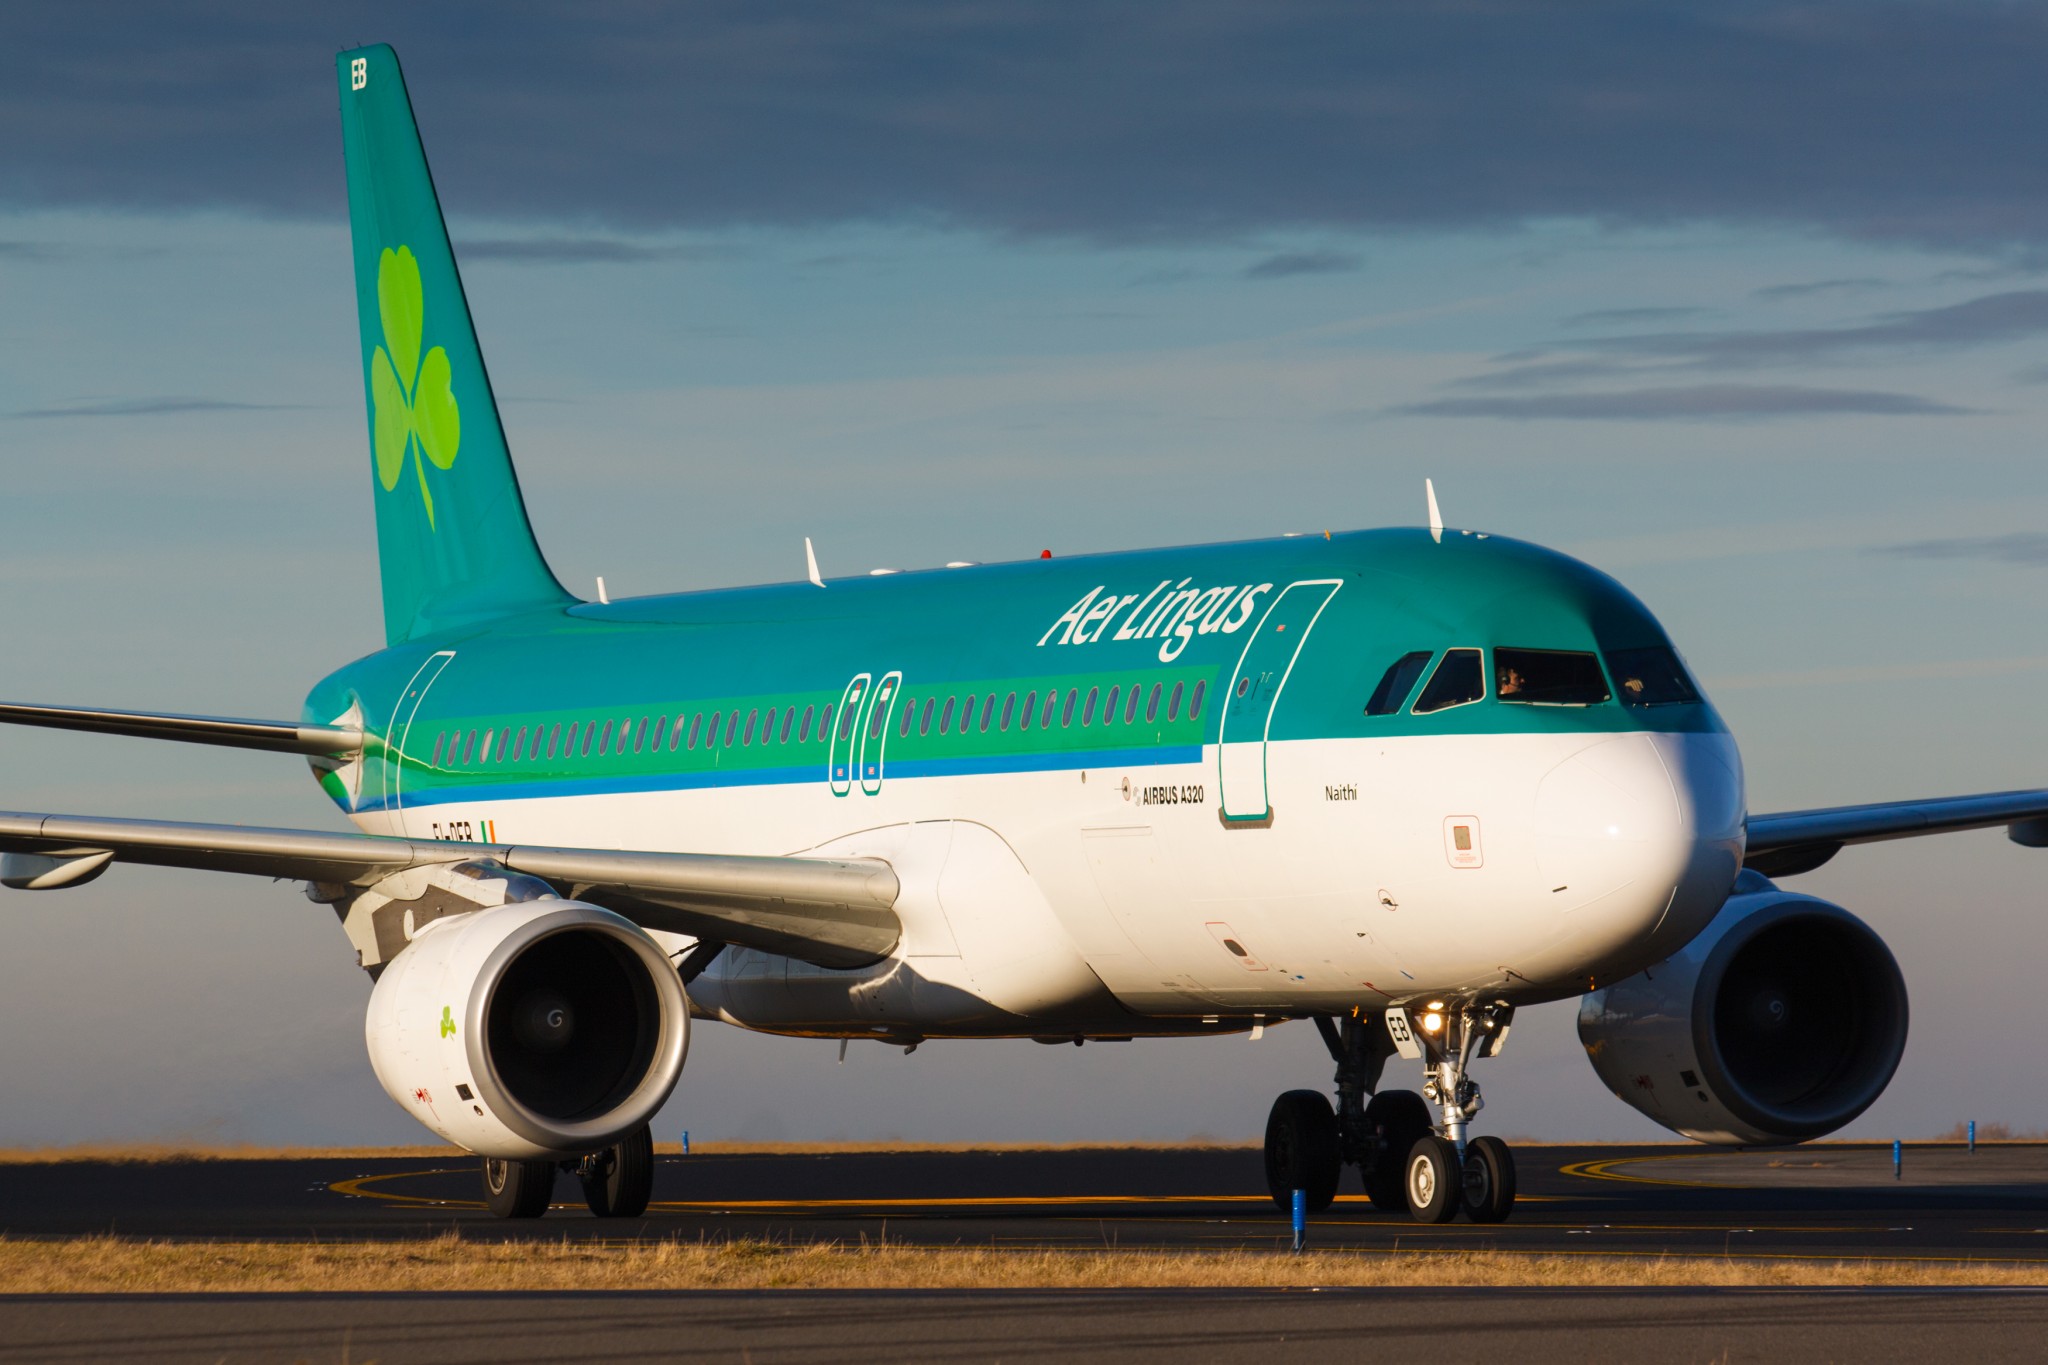 Aer Lingus commitment to transatlantic routes